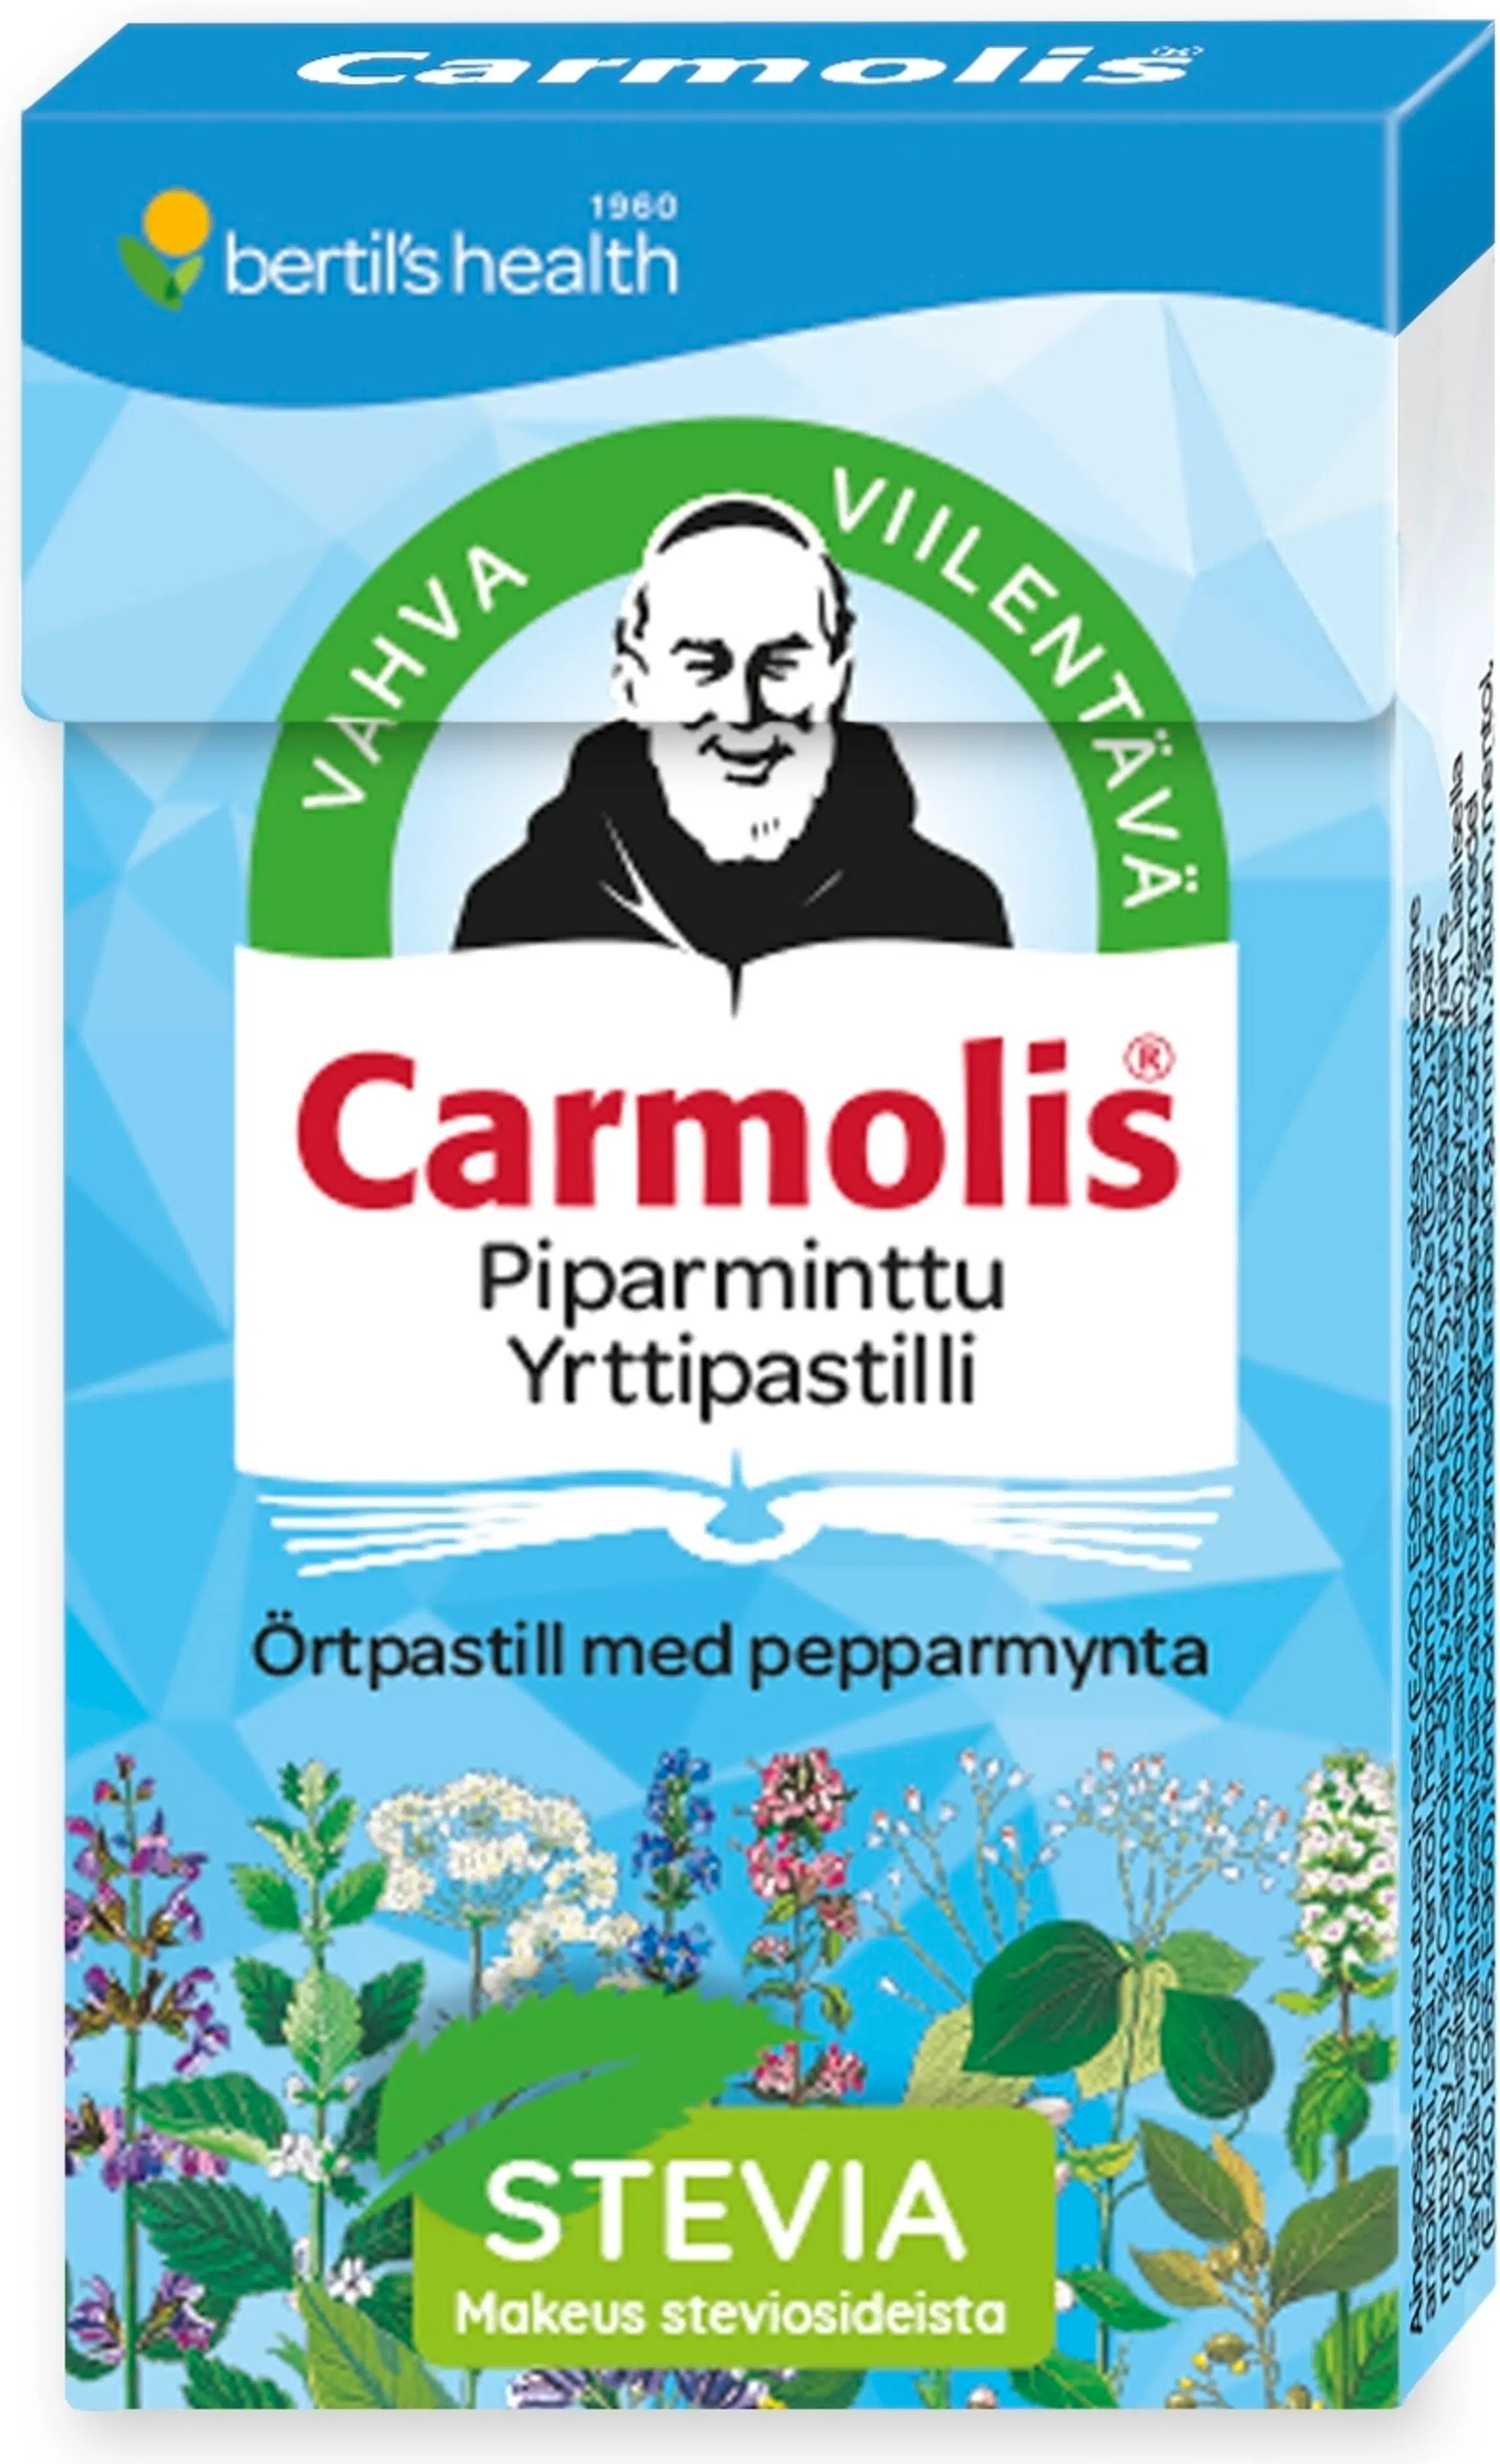 bertil´s health Carmolis piparminttu yrttipastilli 45 g